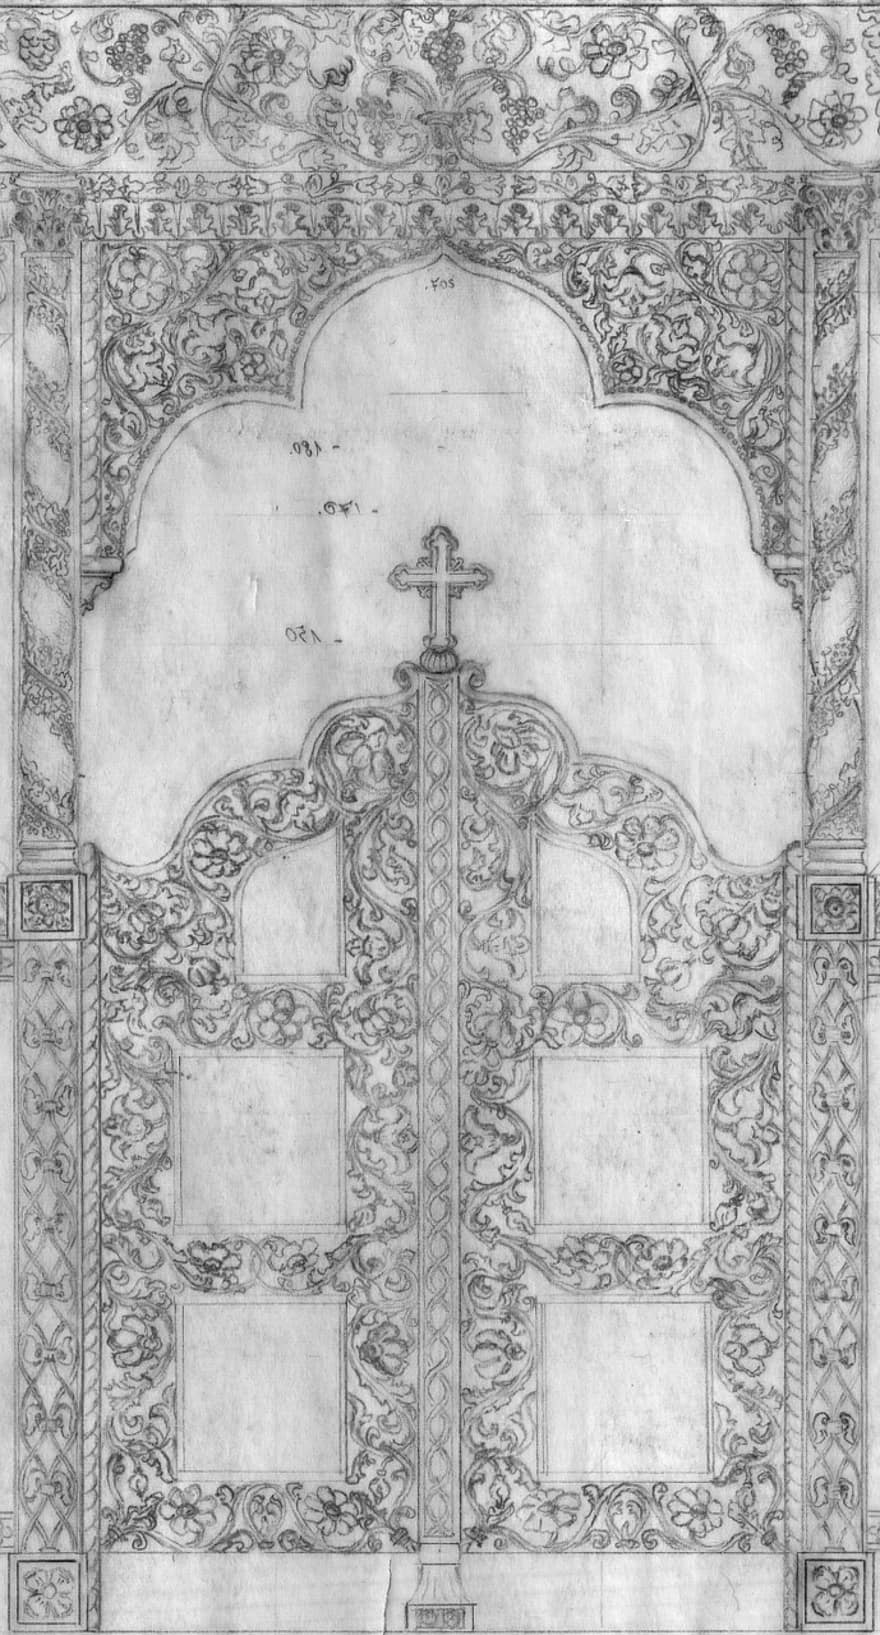 iconostasis, Altar Ikonostasis, Pintu Altar, pintu gereja, gereja, memasukkan, Arsitektur, tujuan, pintu kayu, pintu gerbang, ukiran kayu